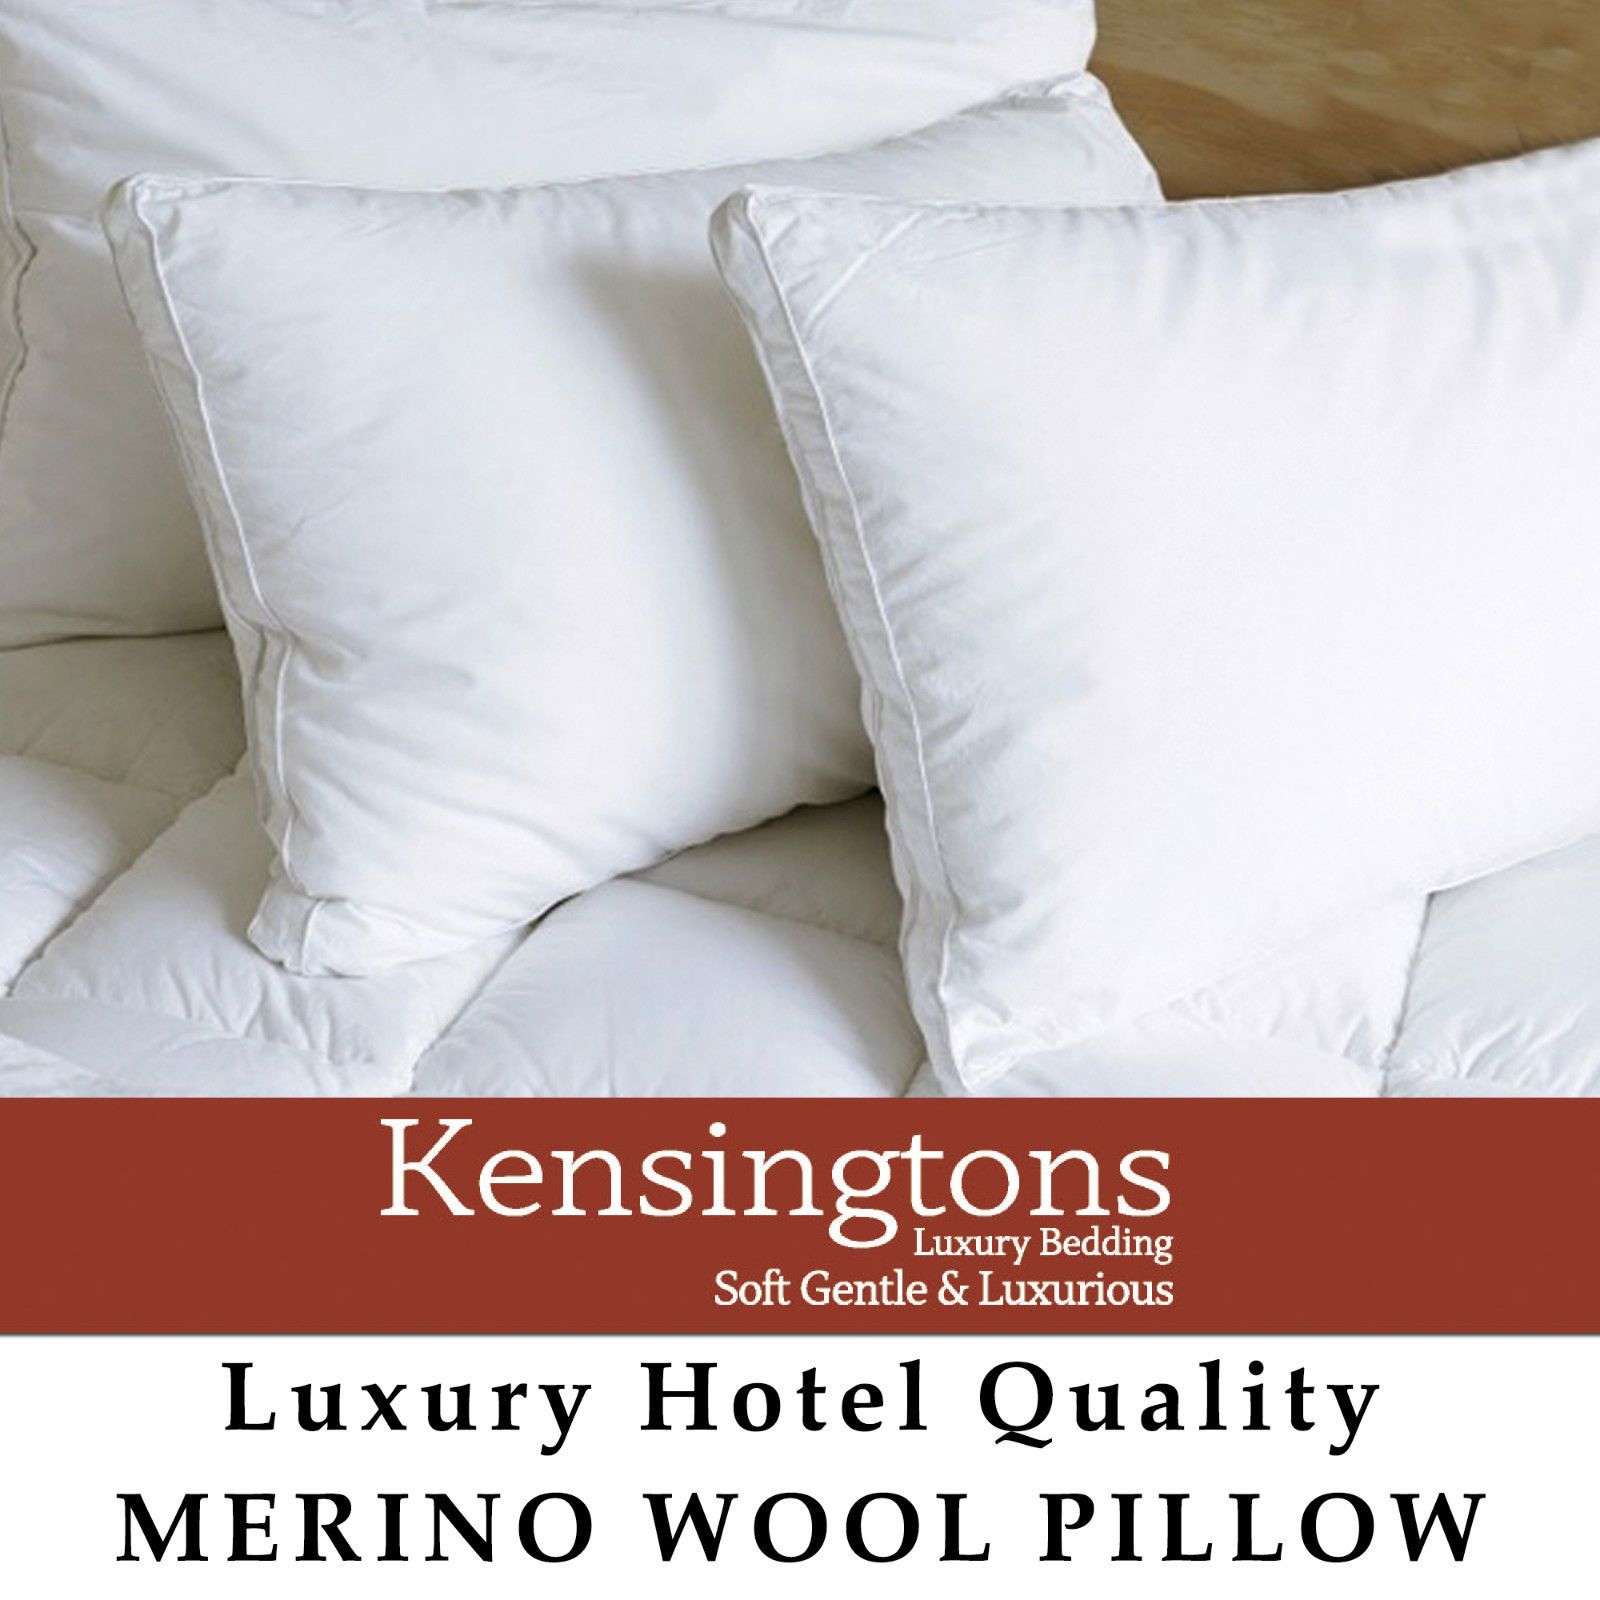 Natural-Merino-Wool-Filled-4-x-Pillow-1000G